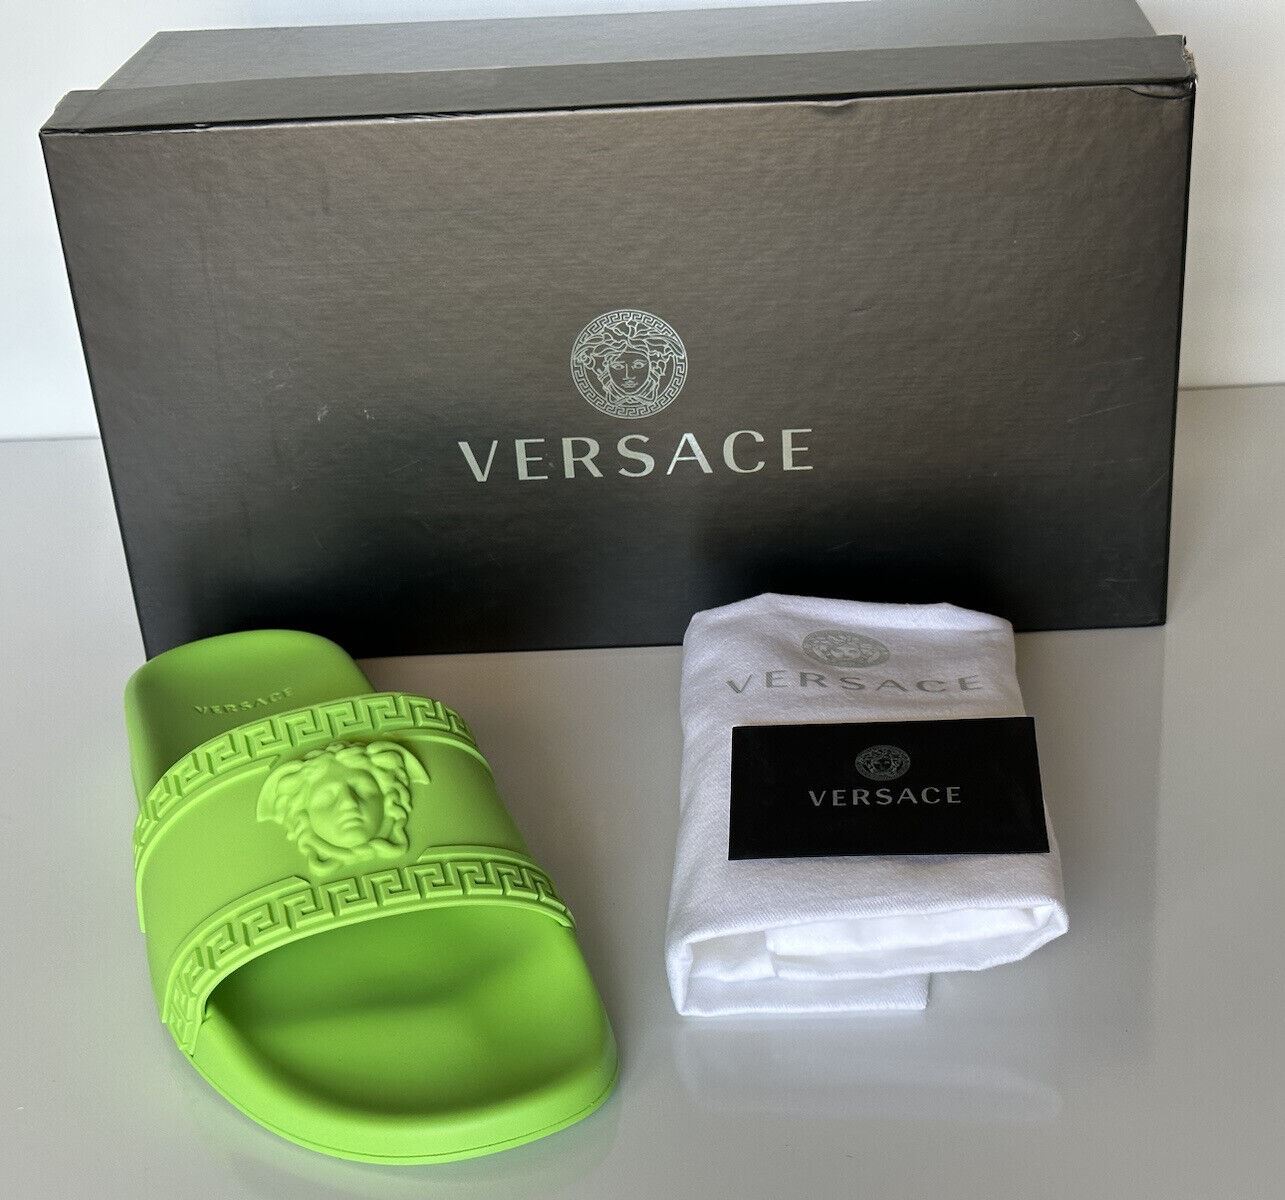 NIB Versace Medusa Head Slides Sandals Neon Green 14 US (47 Euro) DSU5883 Italy